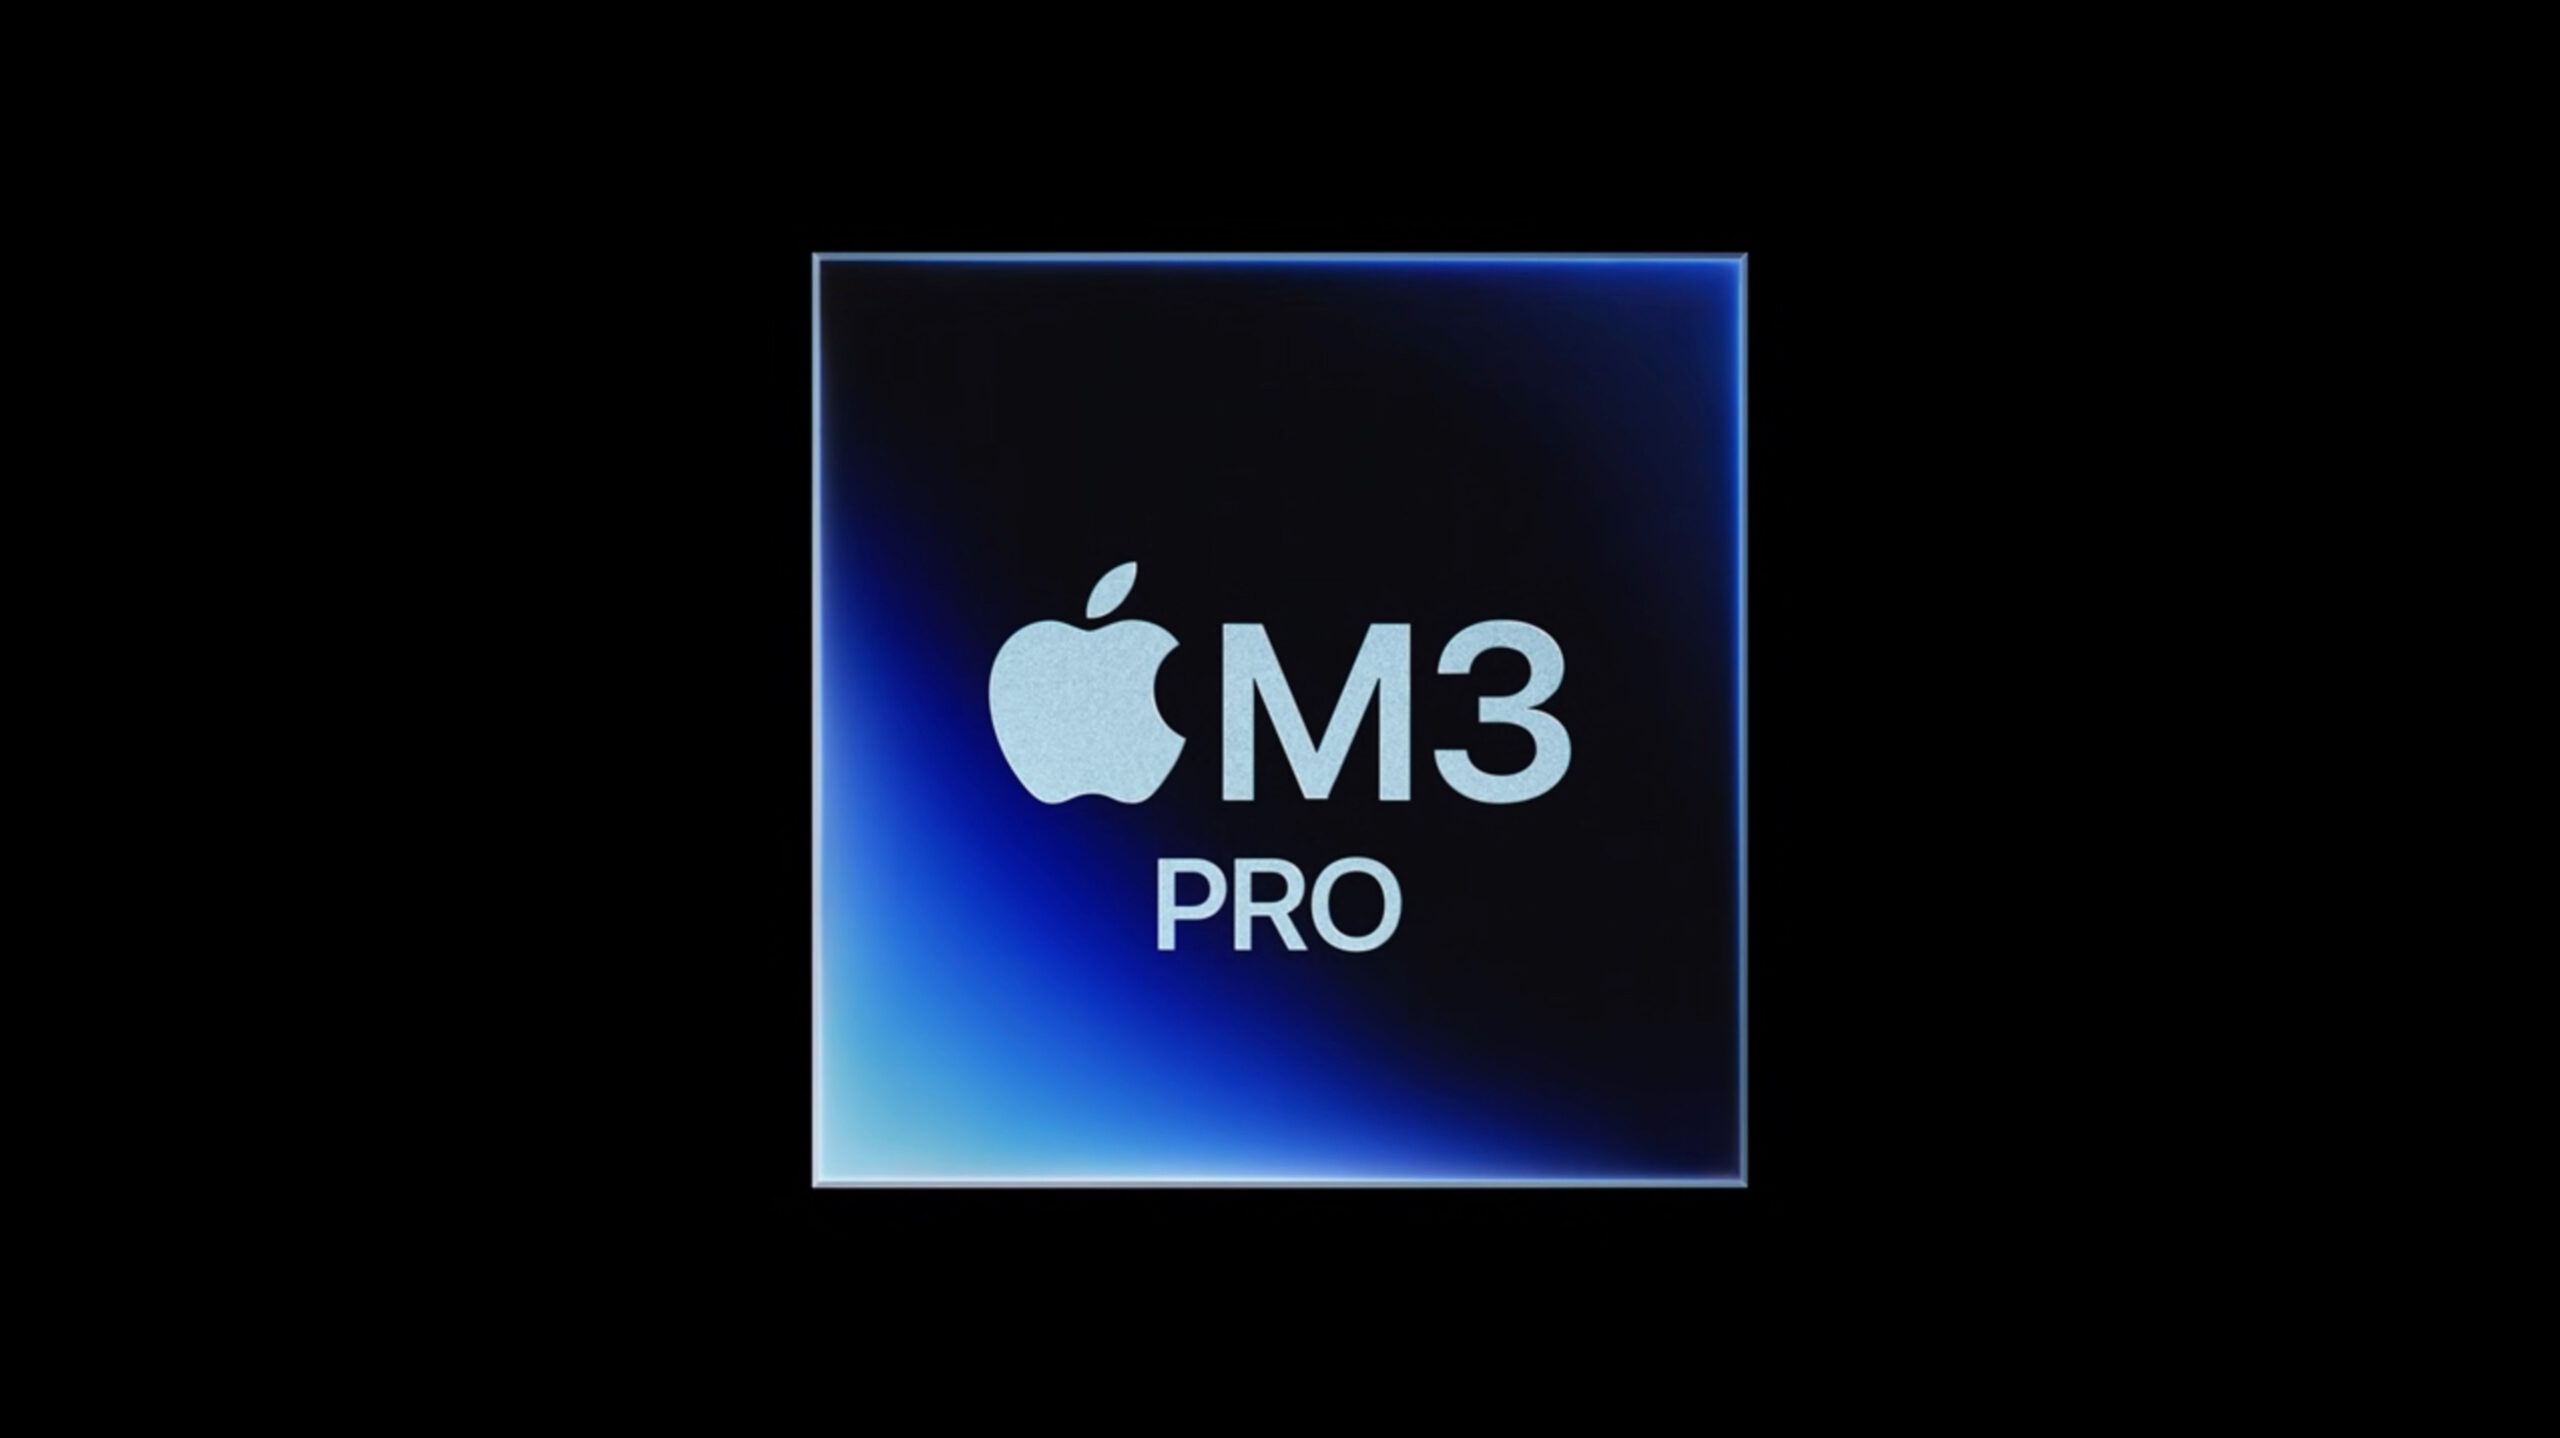 m3 pro chip.jpg